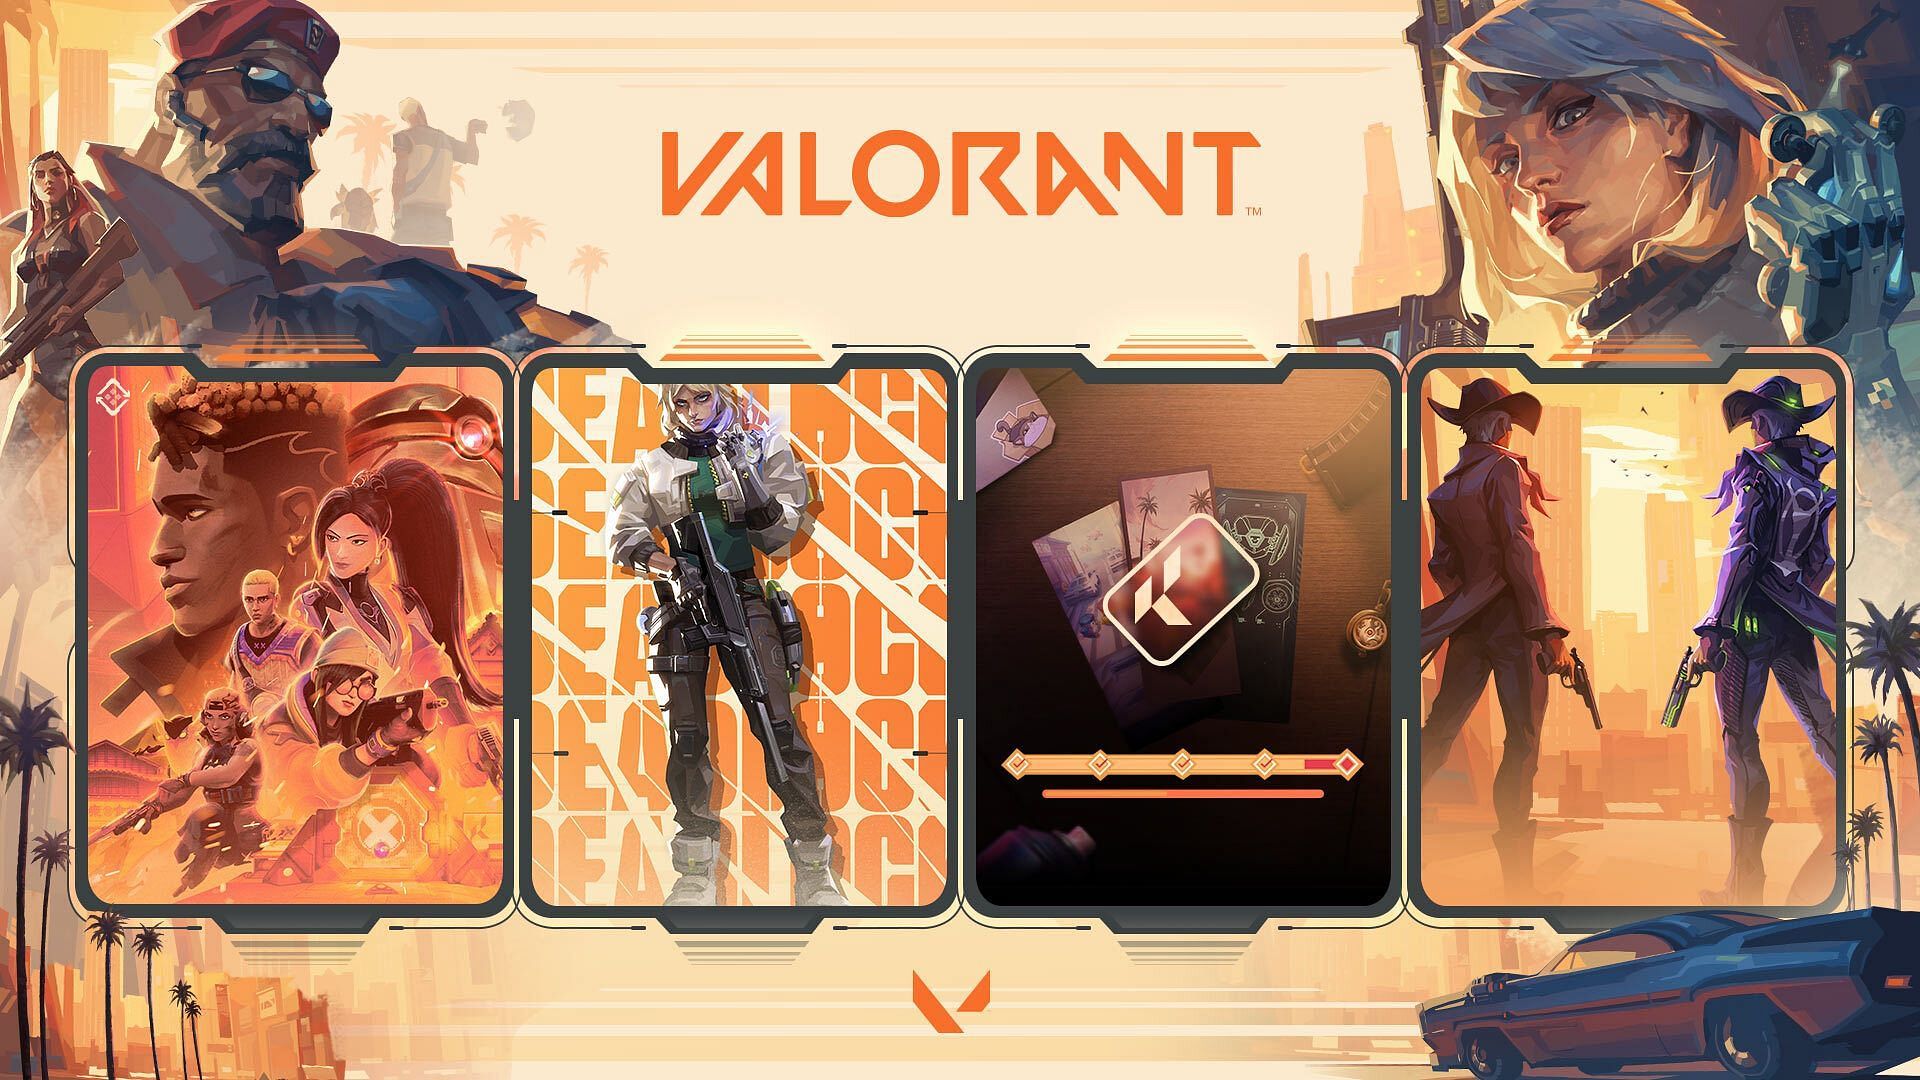 Valorant Episode 7 Act 1 (Image via Riot Games)